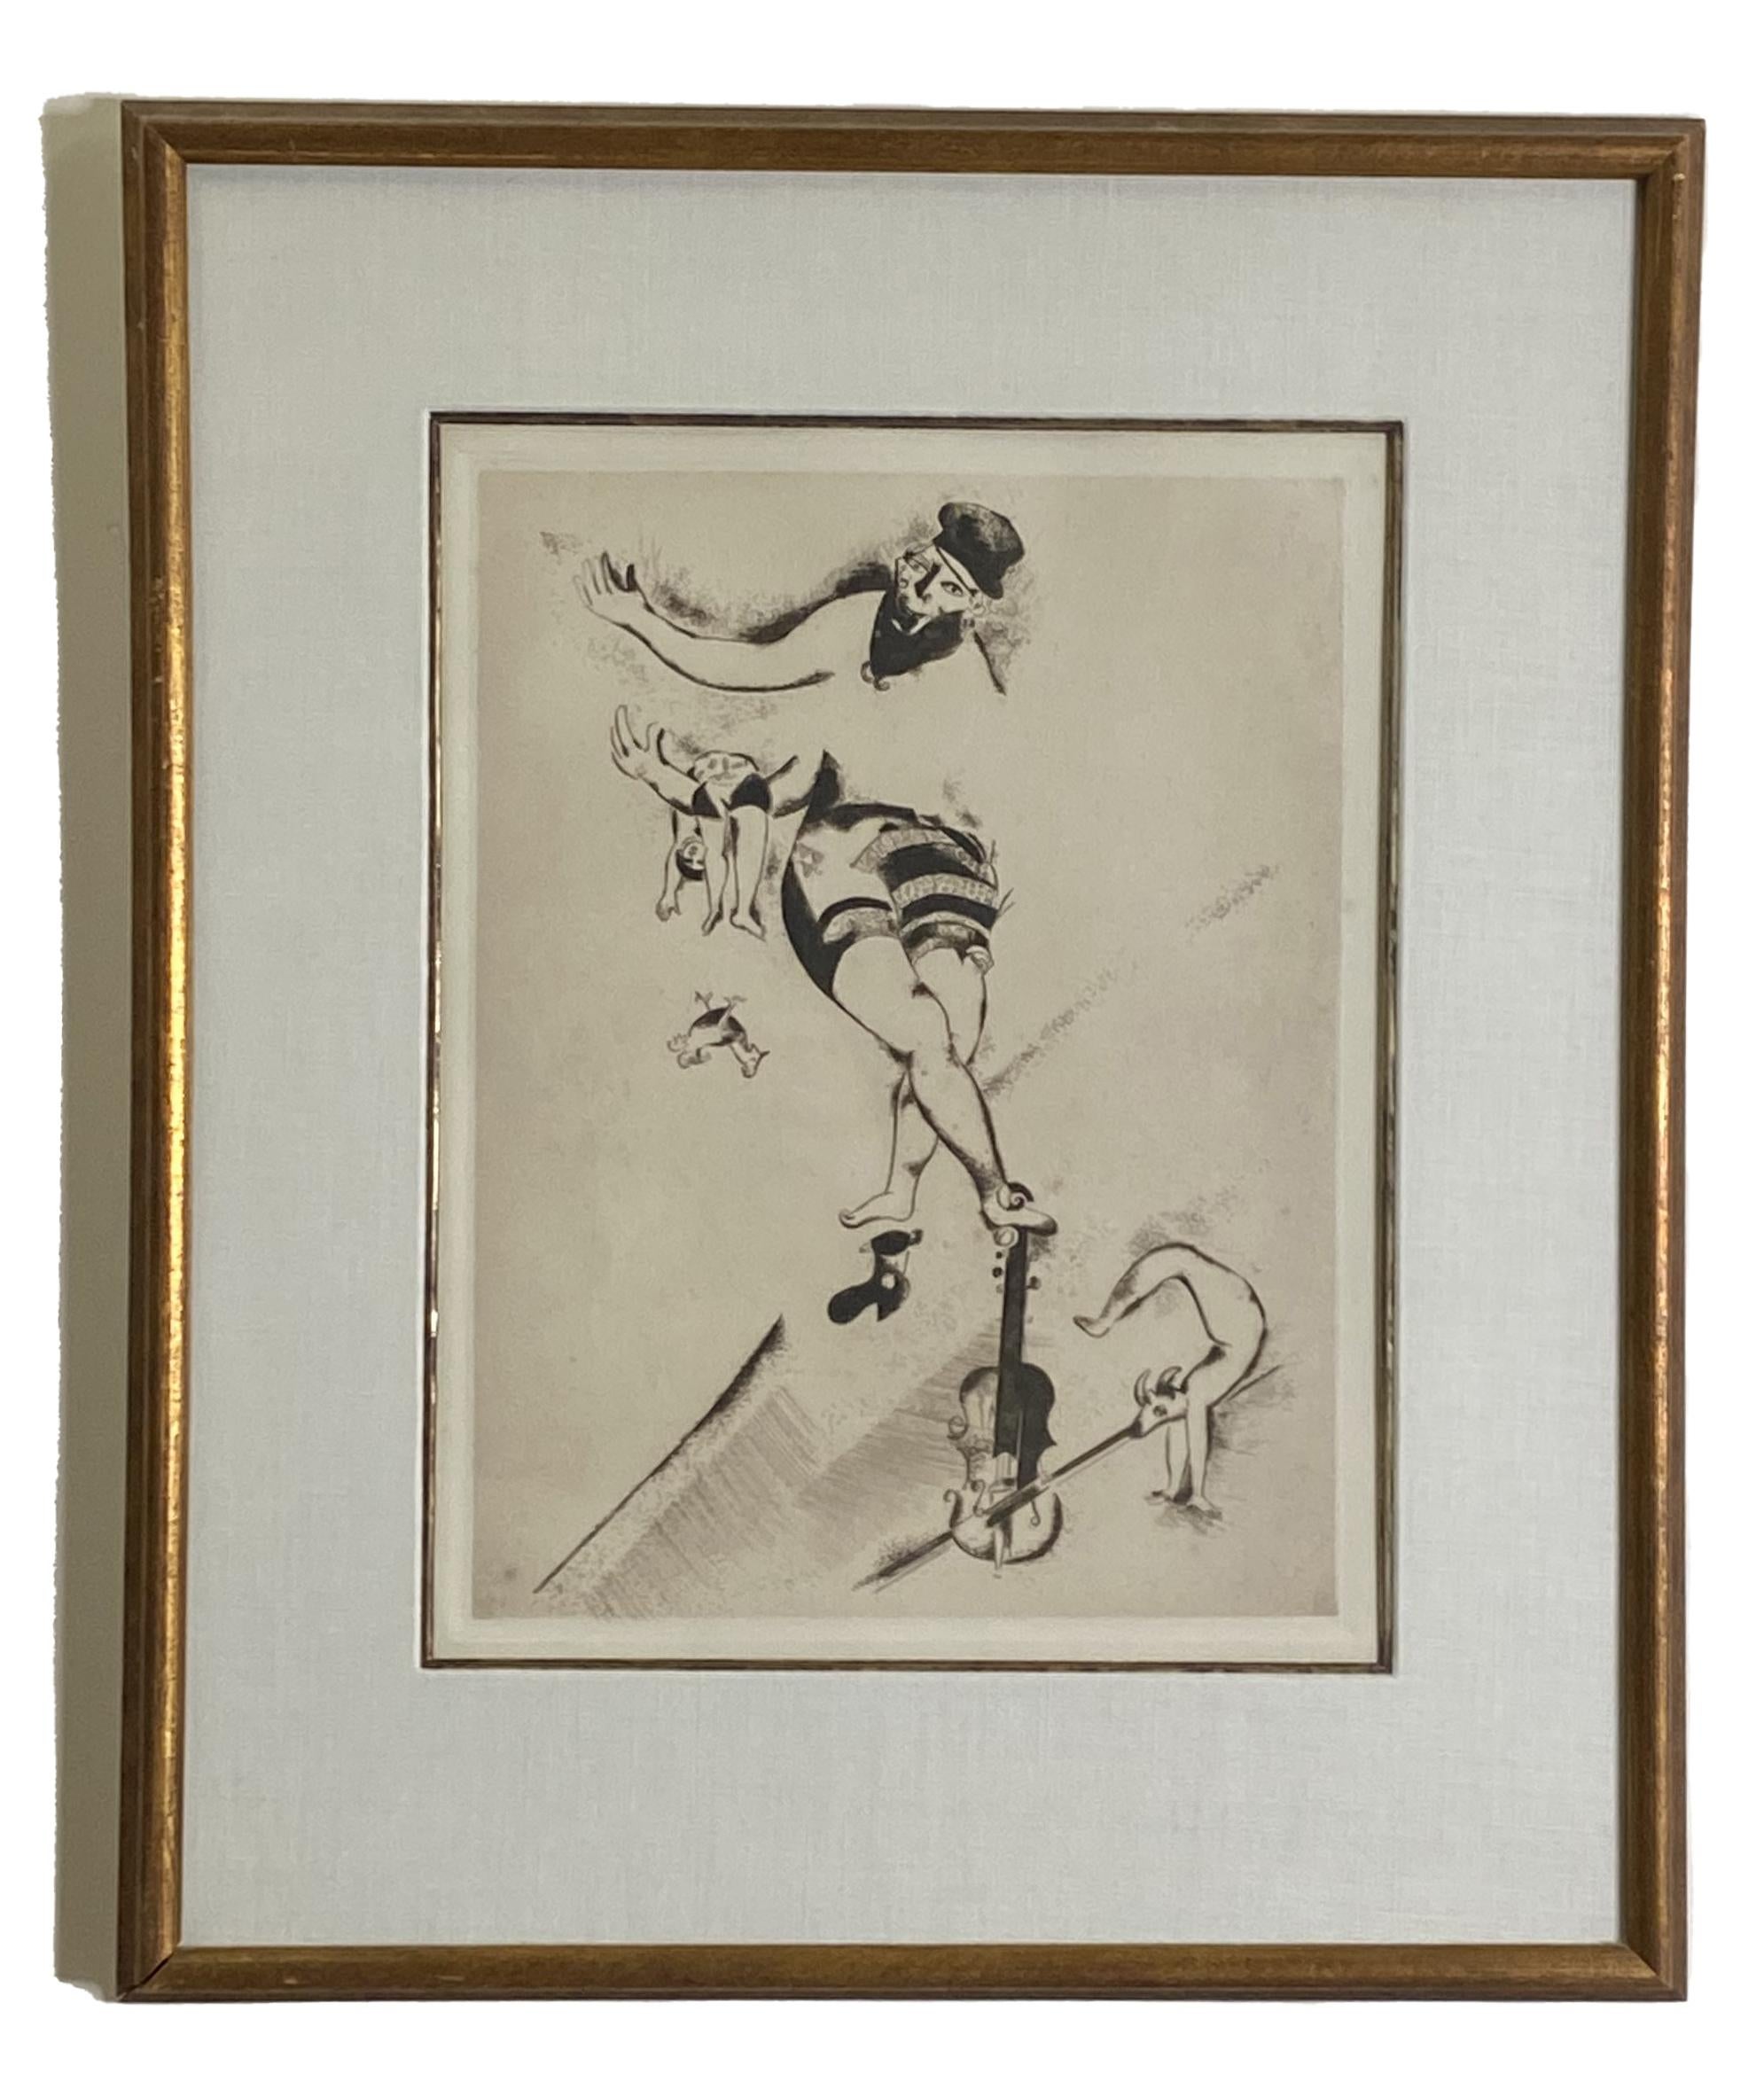 Etching L’ acrobate au violin (Acrobat with Violin) - Print by Marc Chagall